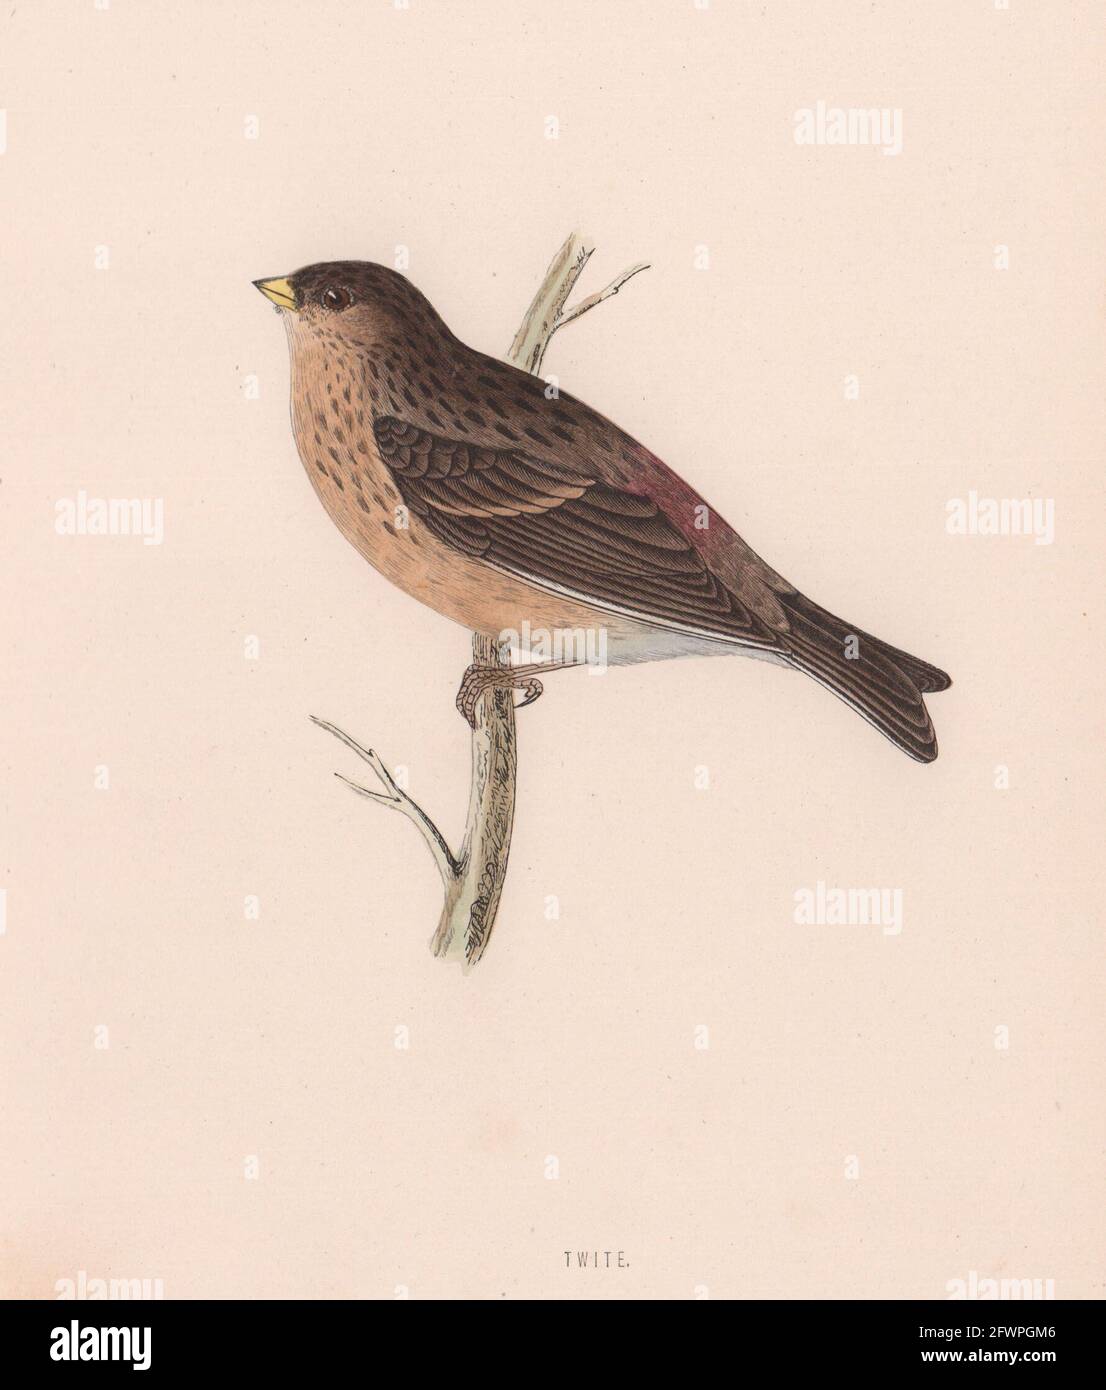 Twite. Morris's British Birds. Antik Farbdruck 1870 alt Stockfoto